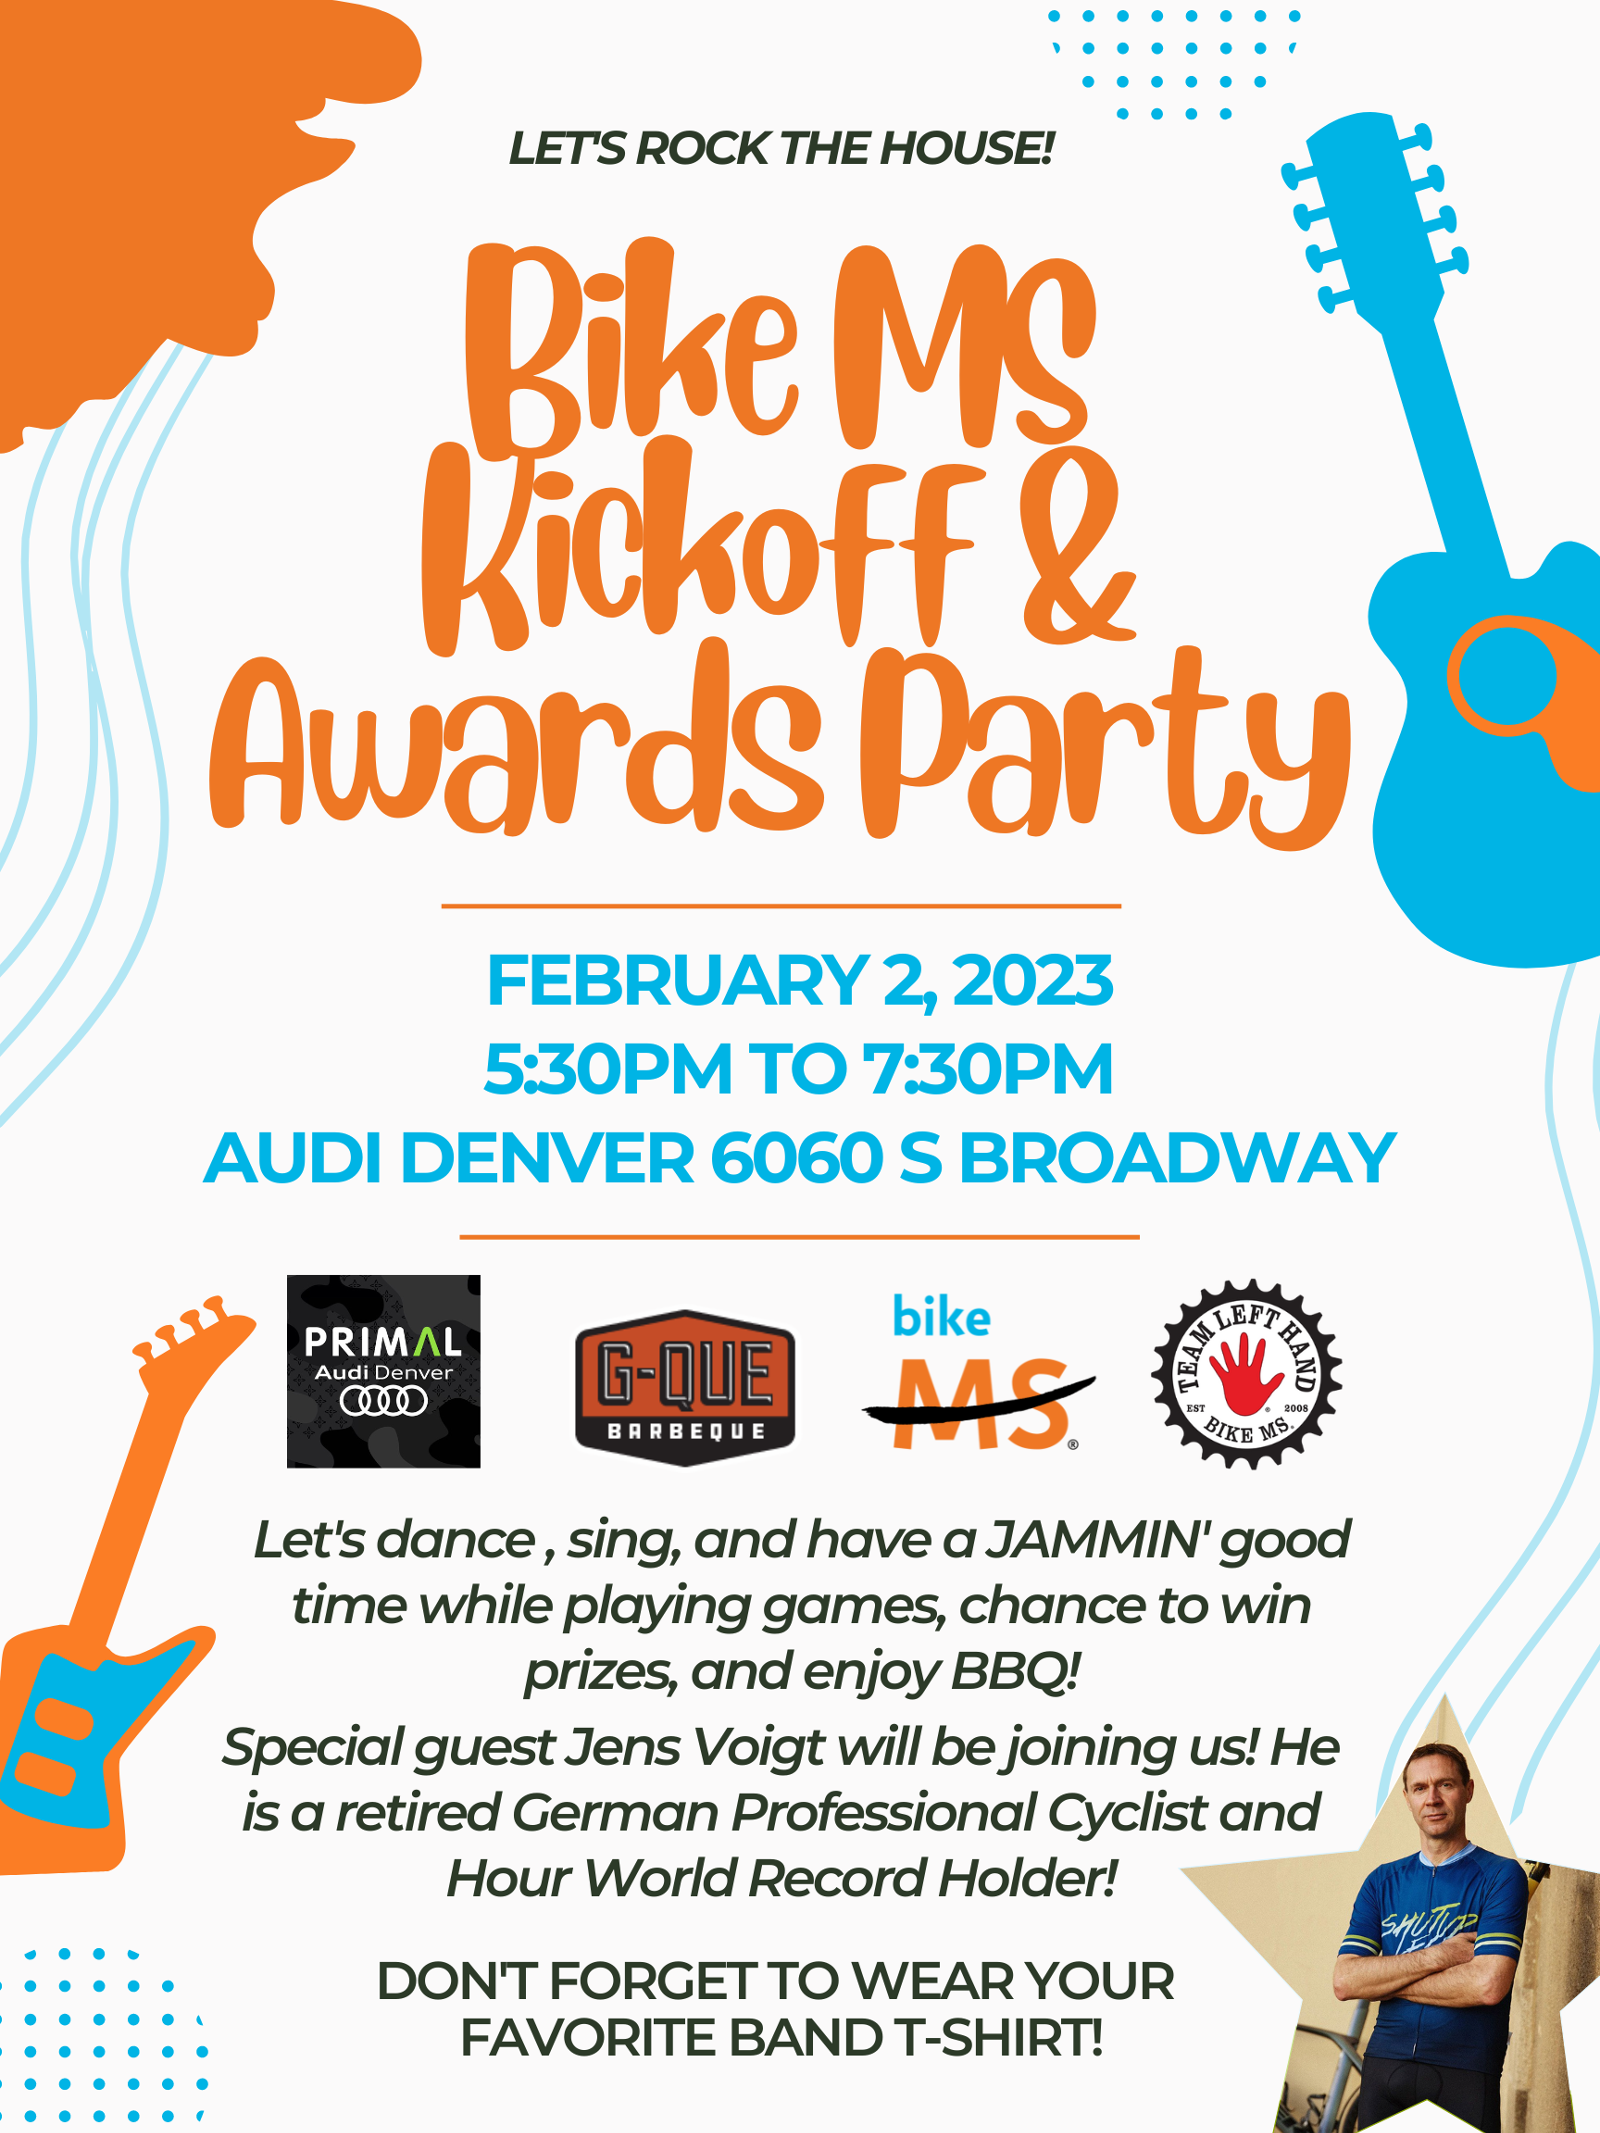 Bike MS Kickoff and Awards party image